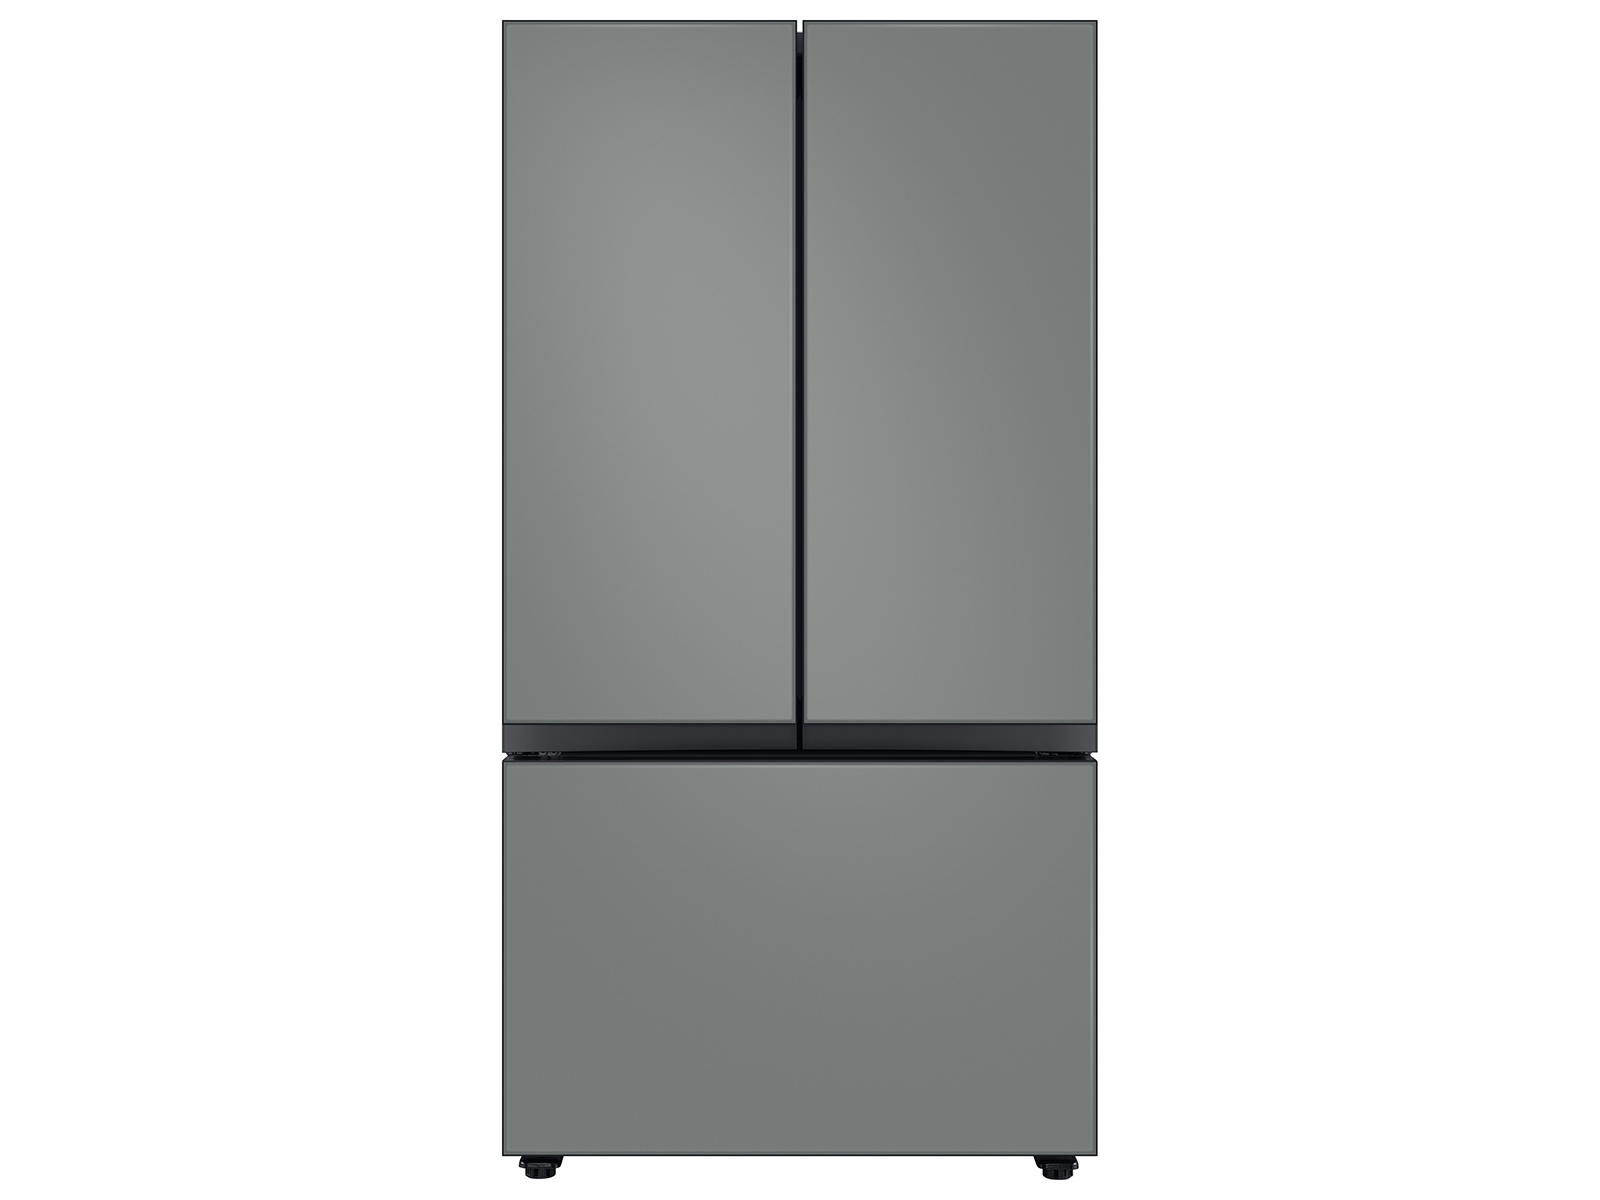 Samsung Bespoke 3-Door French Door Refrigerator (24 cu. ft.) with AutoFill Water Pitcher in Grey Glass(BNDL-1650465175673)